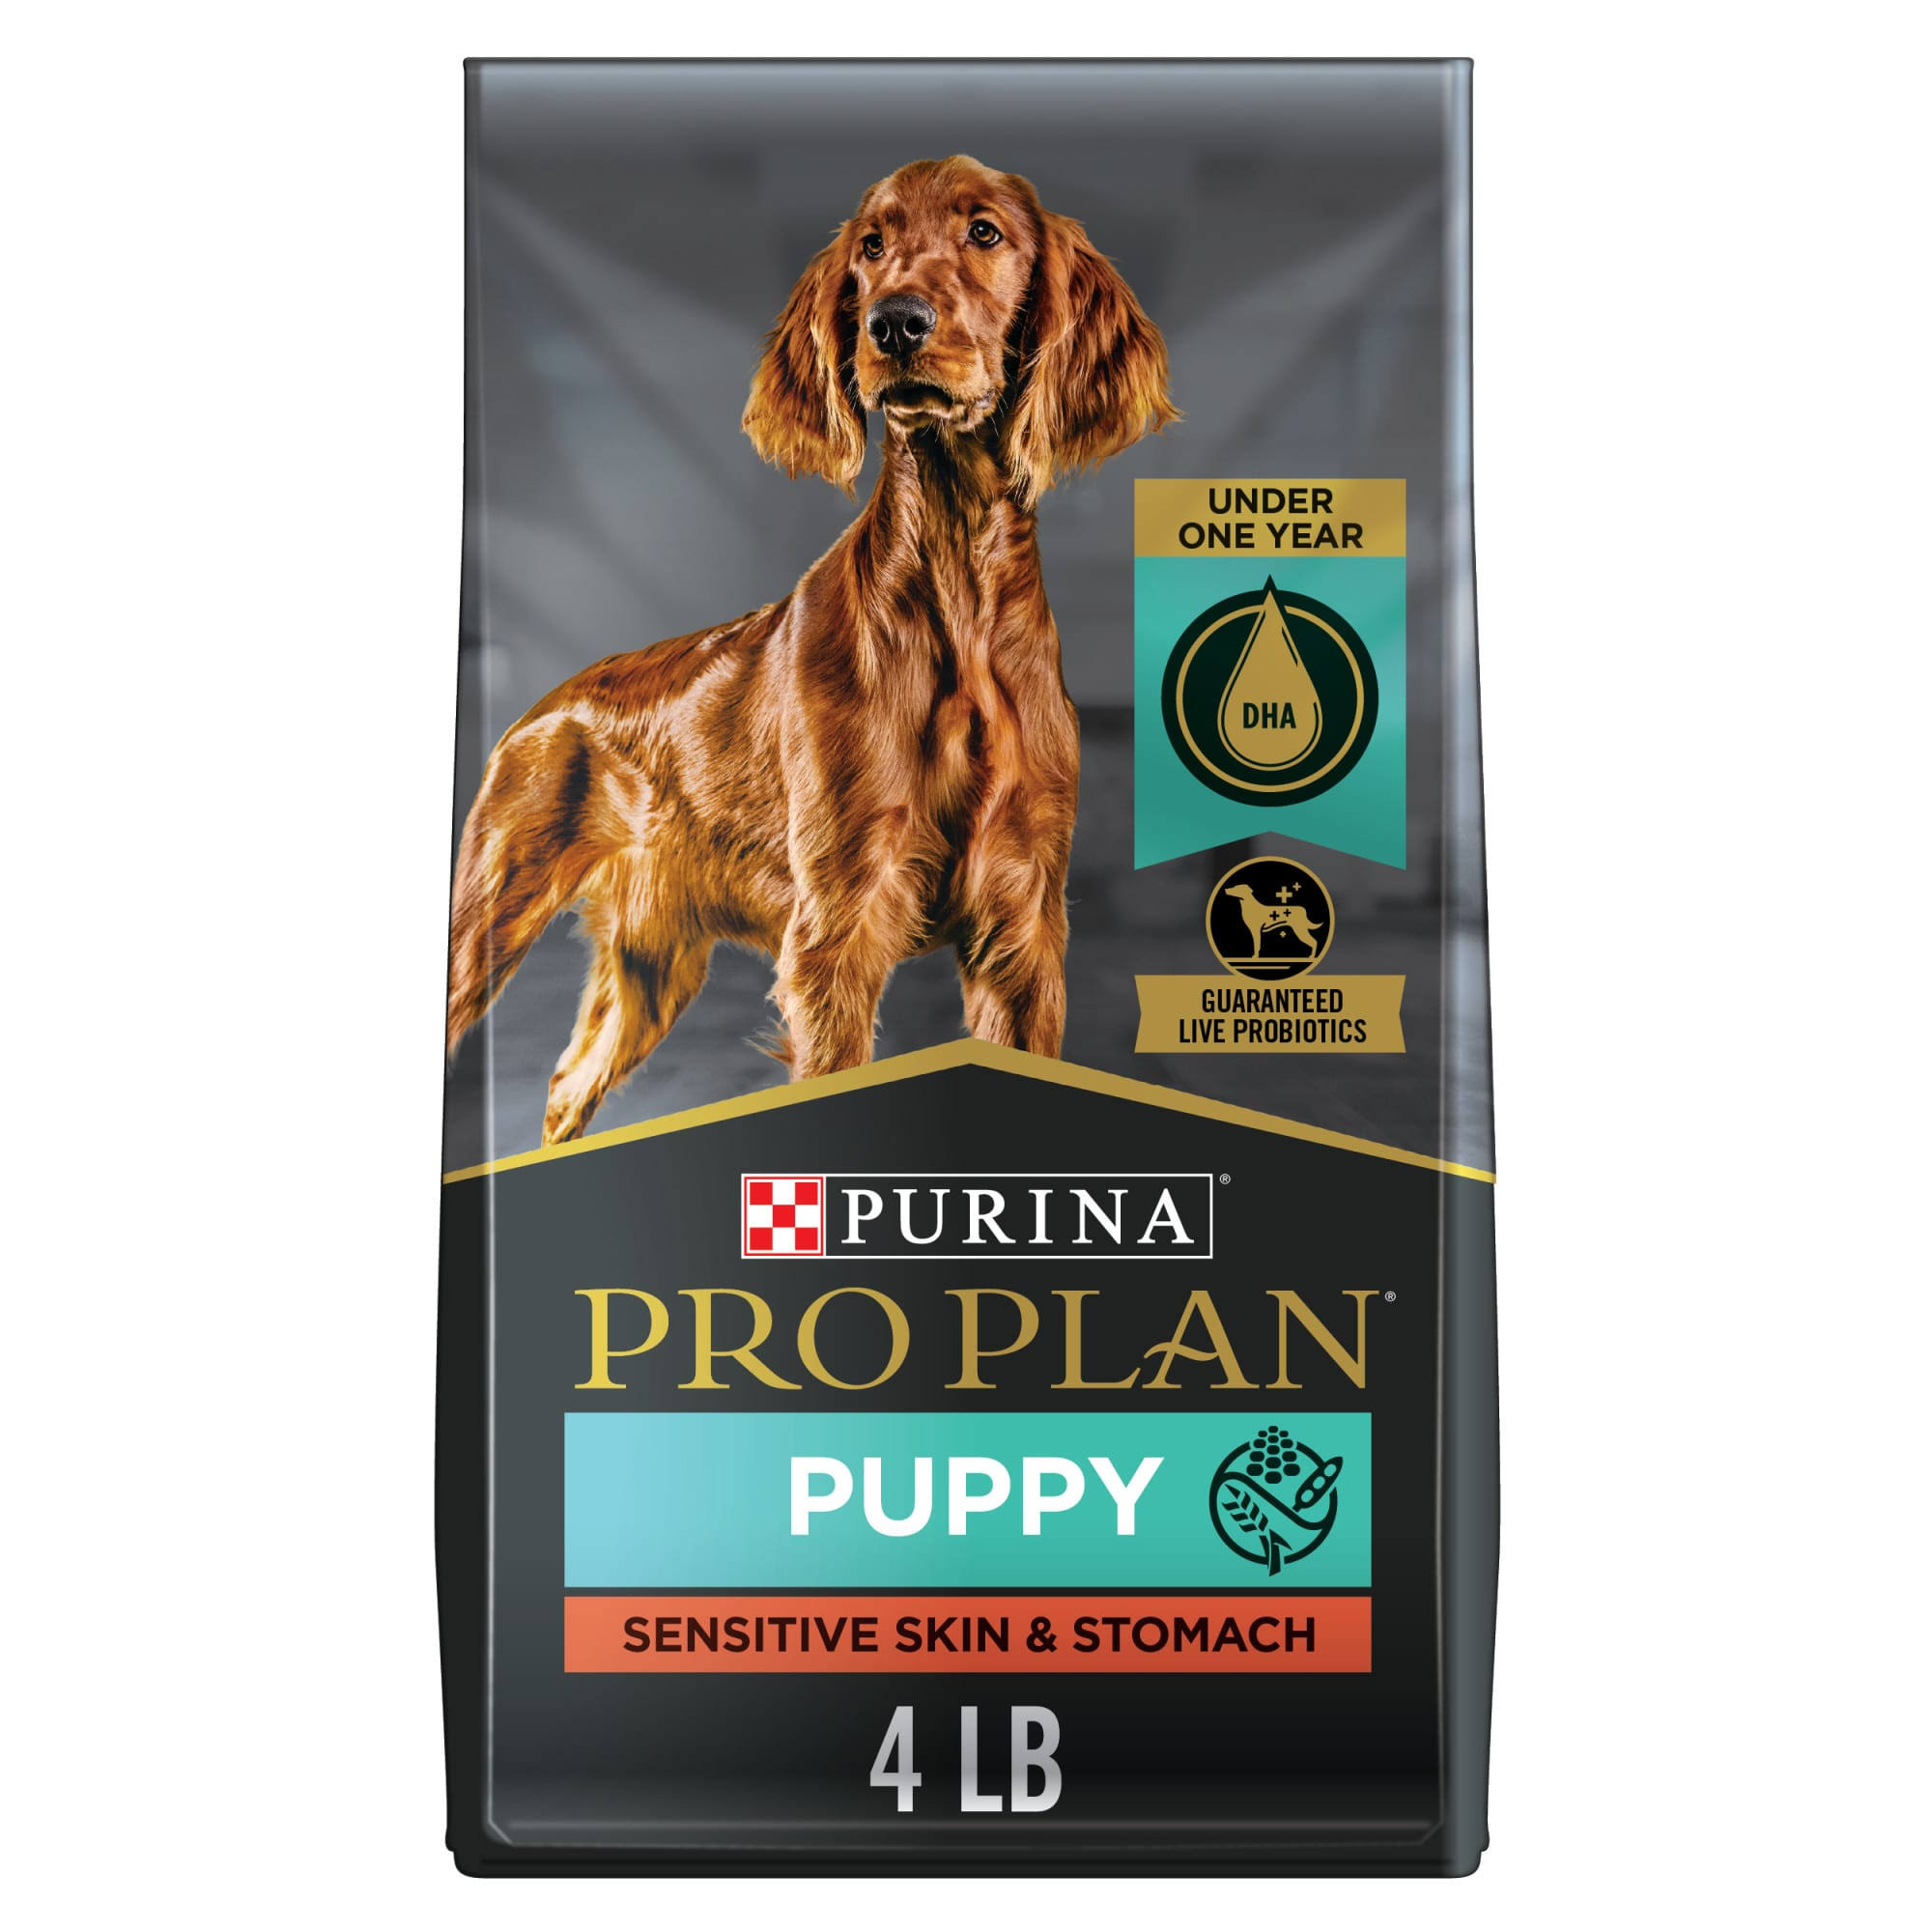 Purina Pro Plan Puppy Sensitive Skin & Stomach Salmon & Rice Dry Dog Food 4 LB